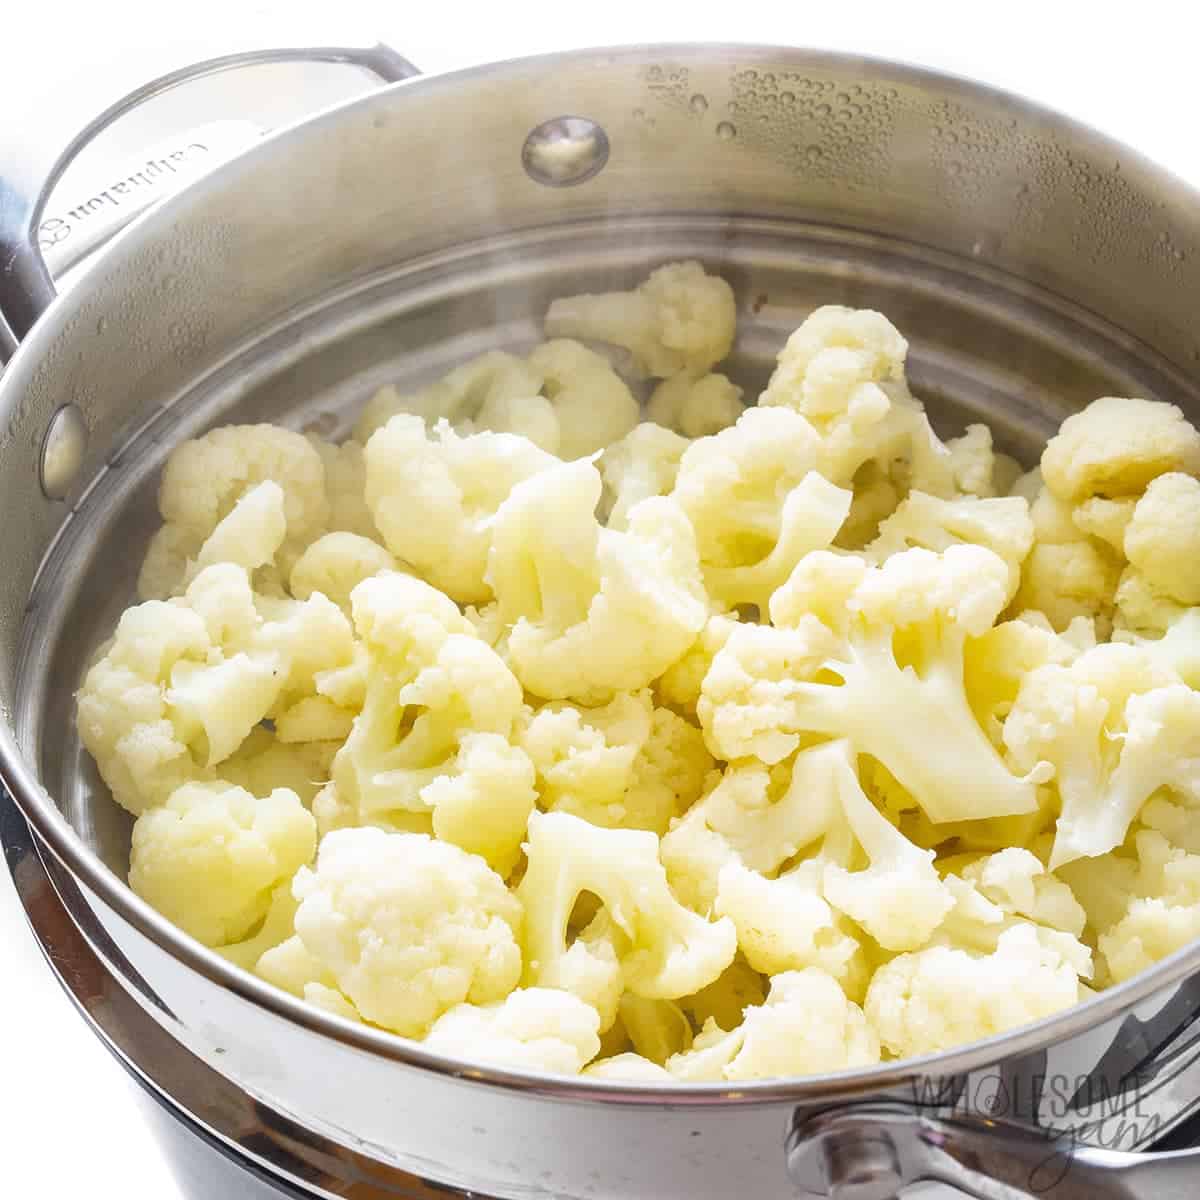 Steamed cauliflower for mashing